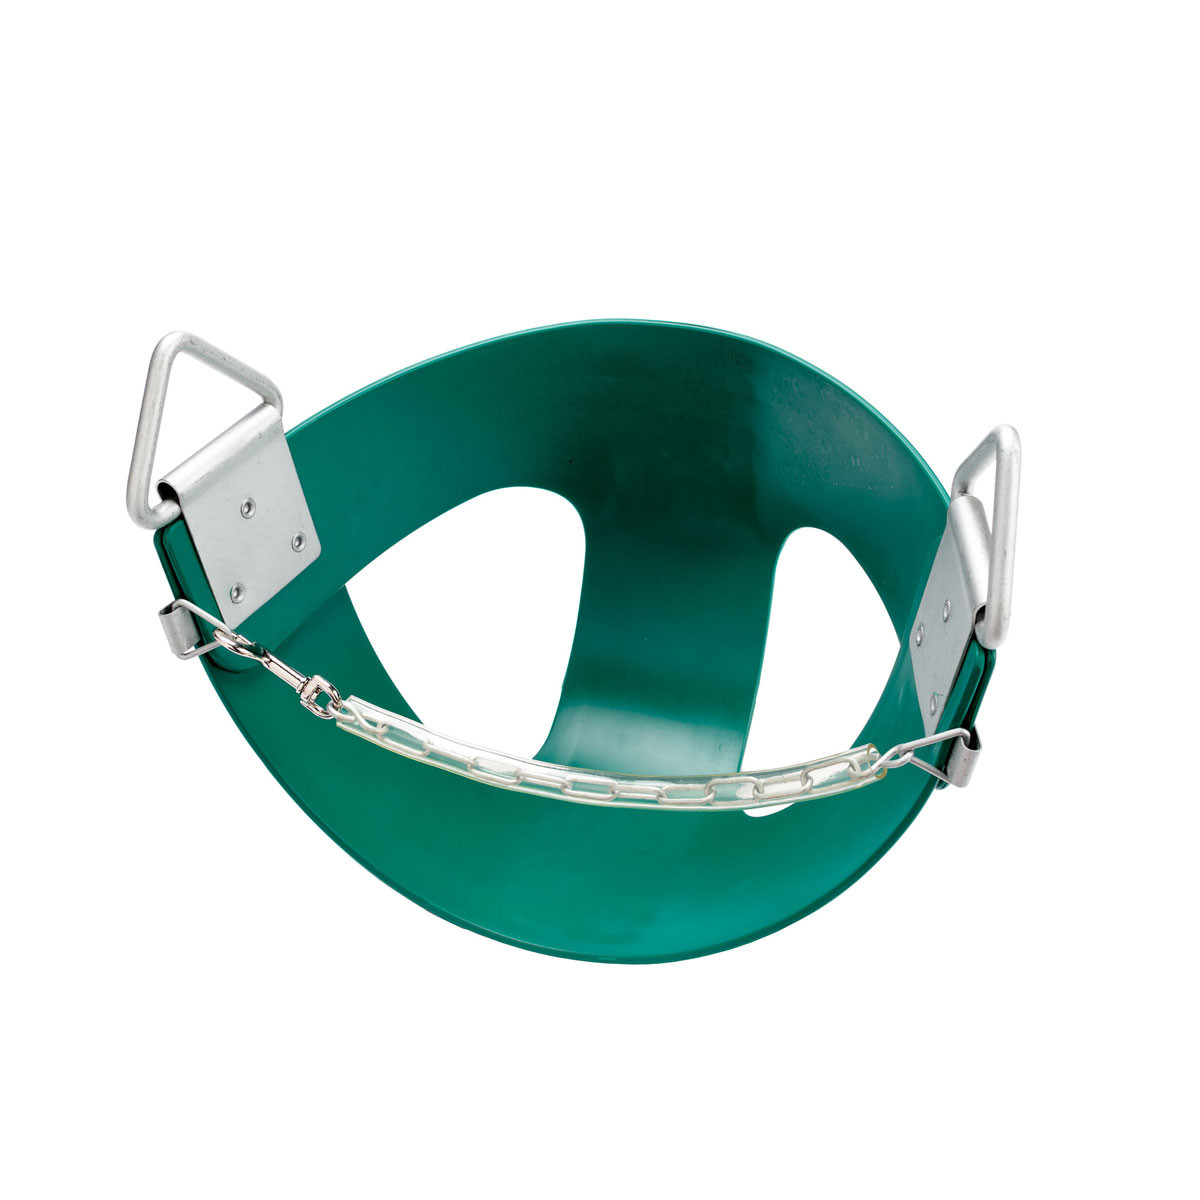 Commercial Rubber Half Bucket Swing Seat - Green